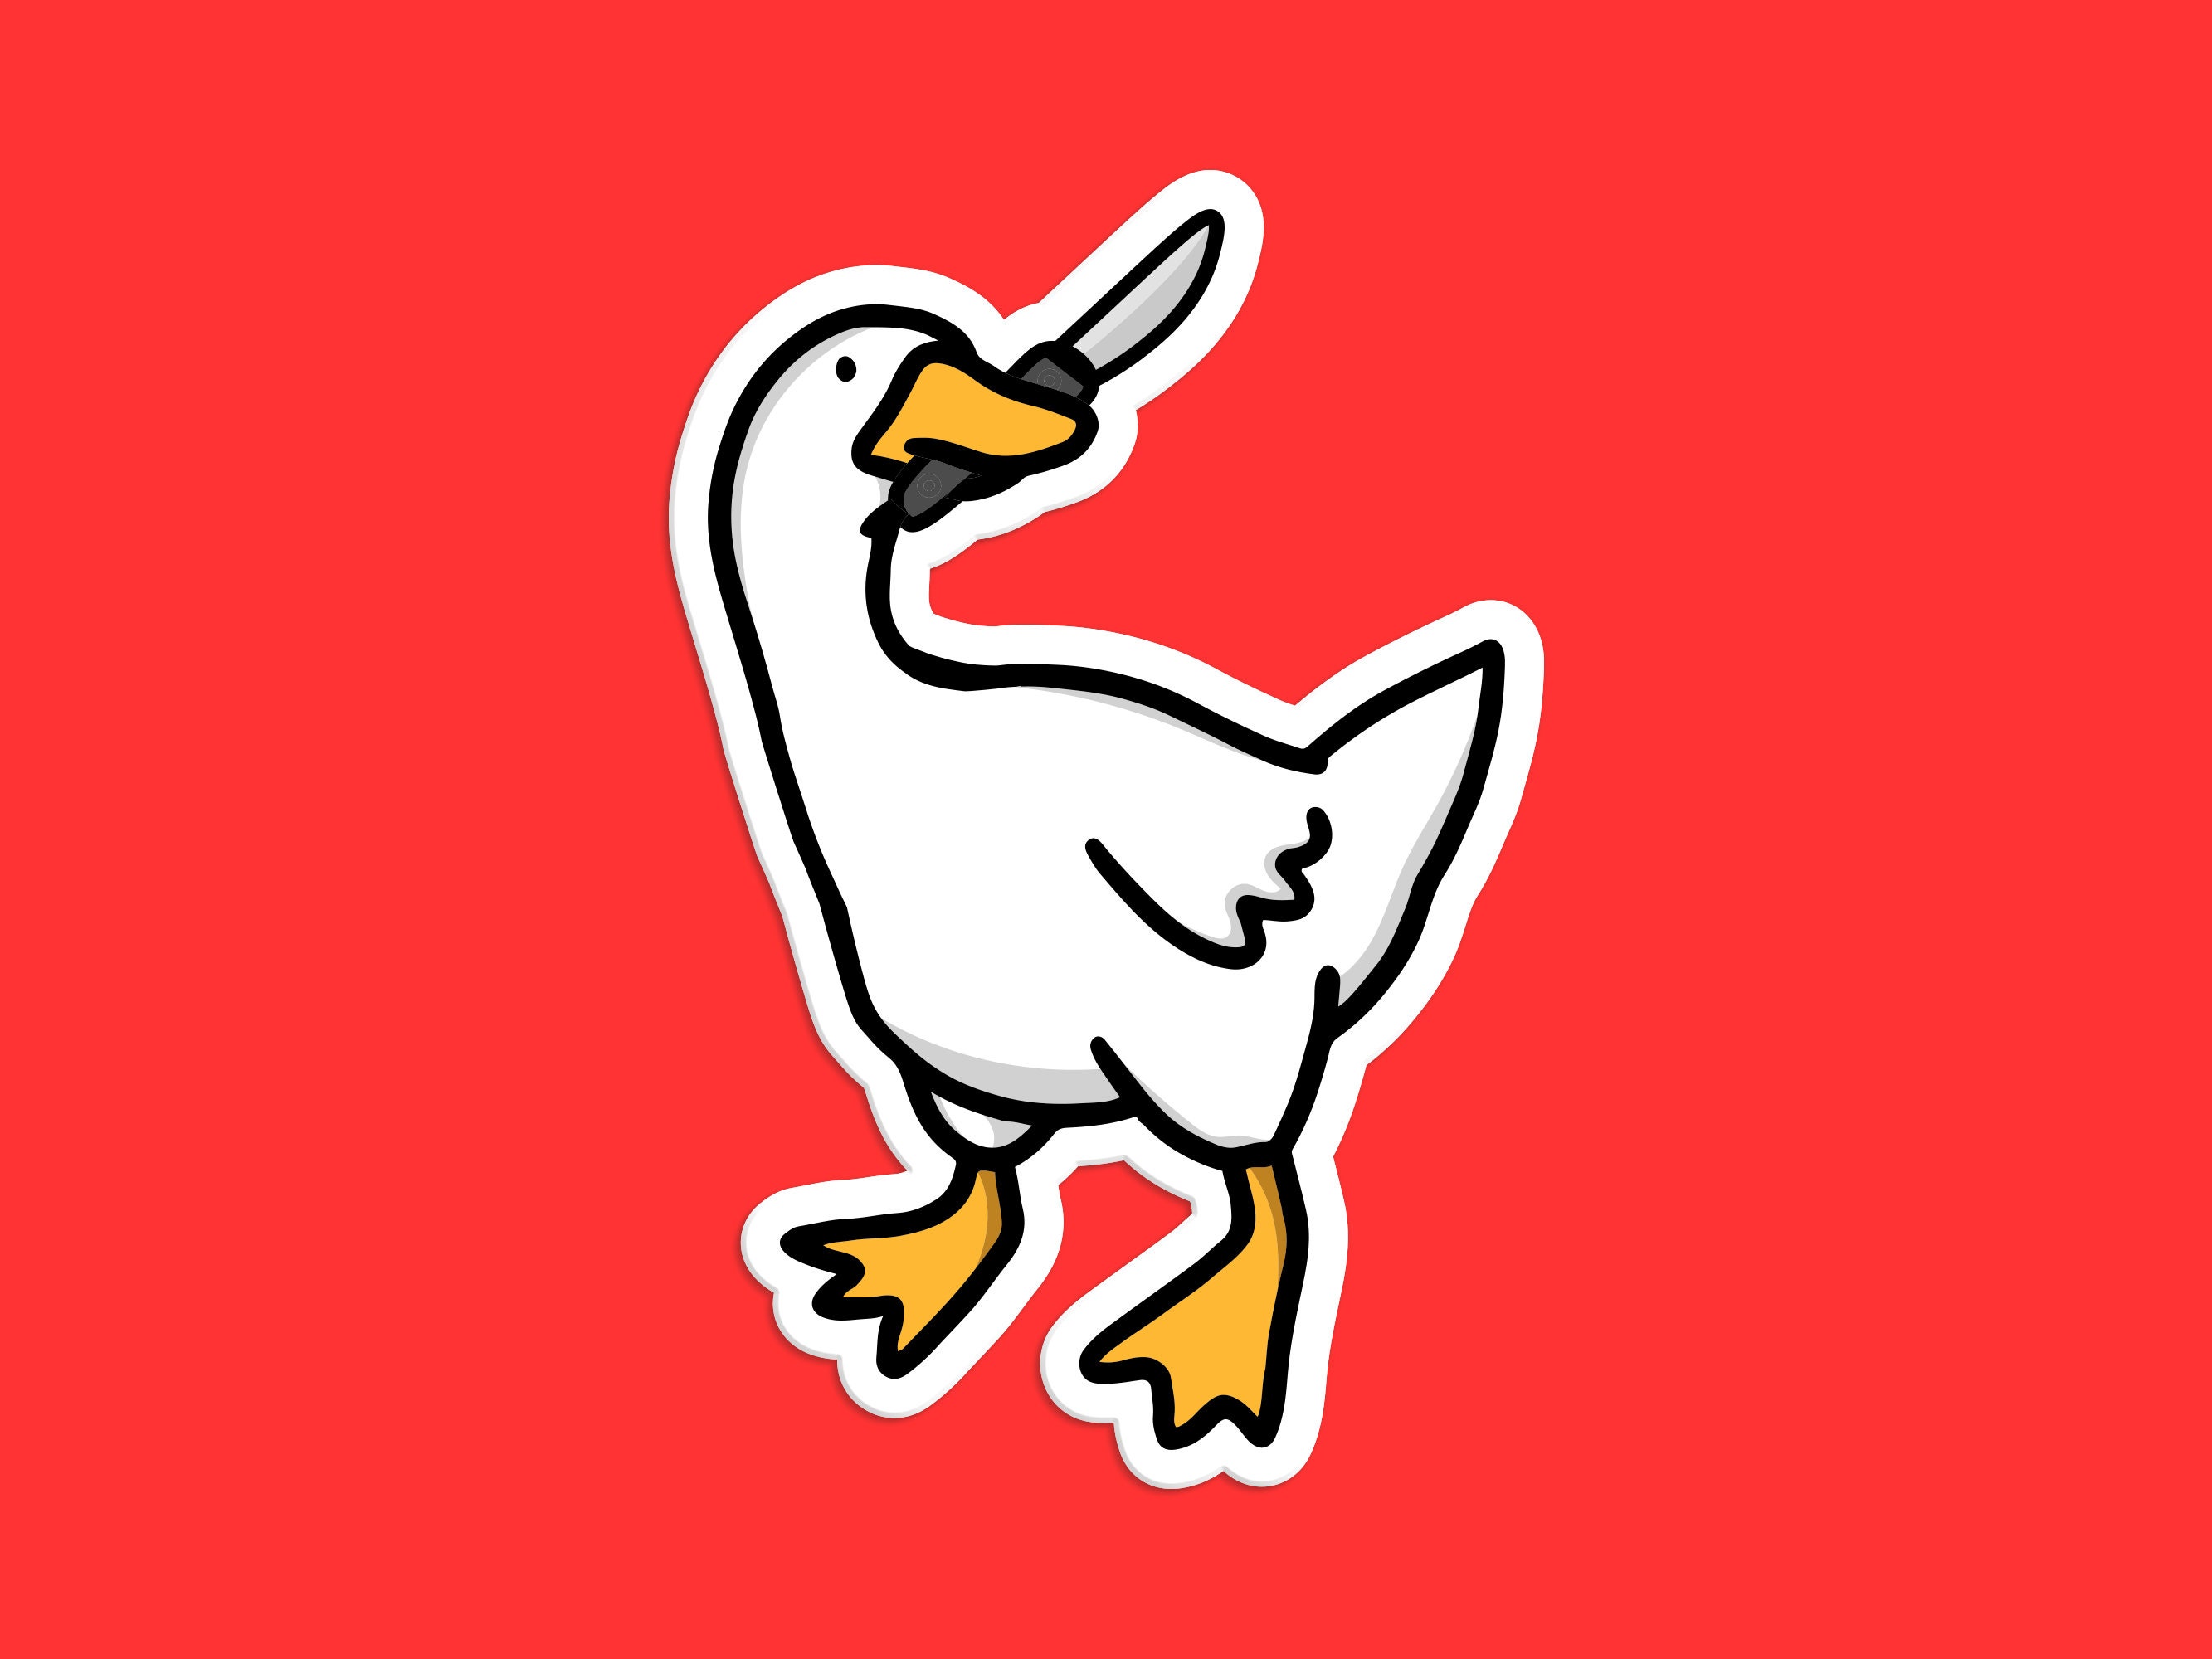 Goose Band Inspired Yeti Stickers 